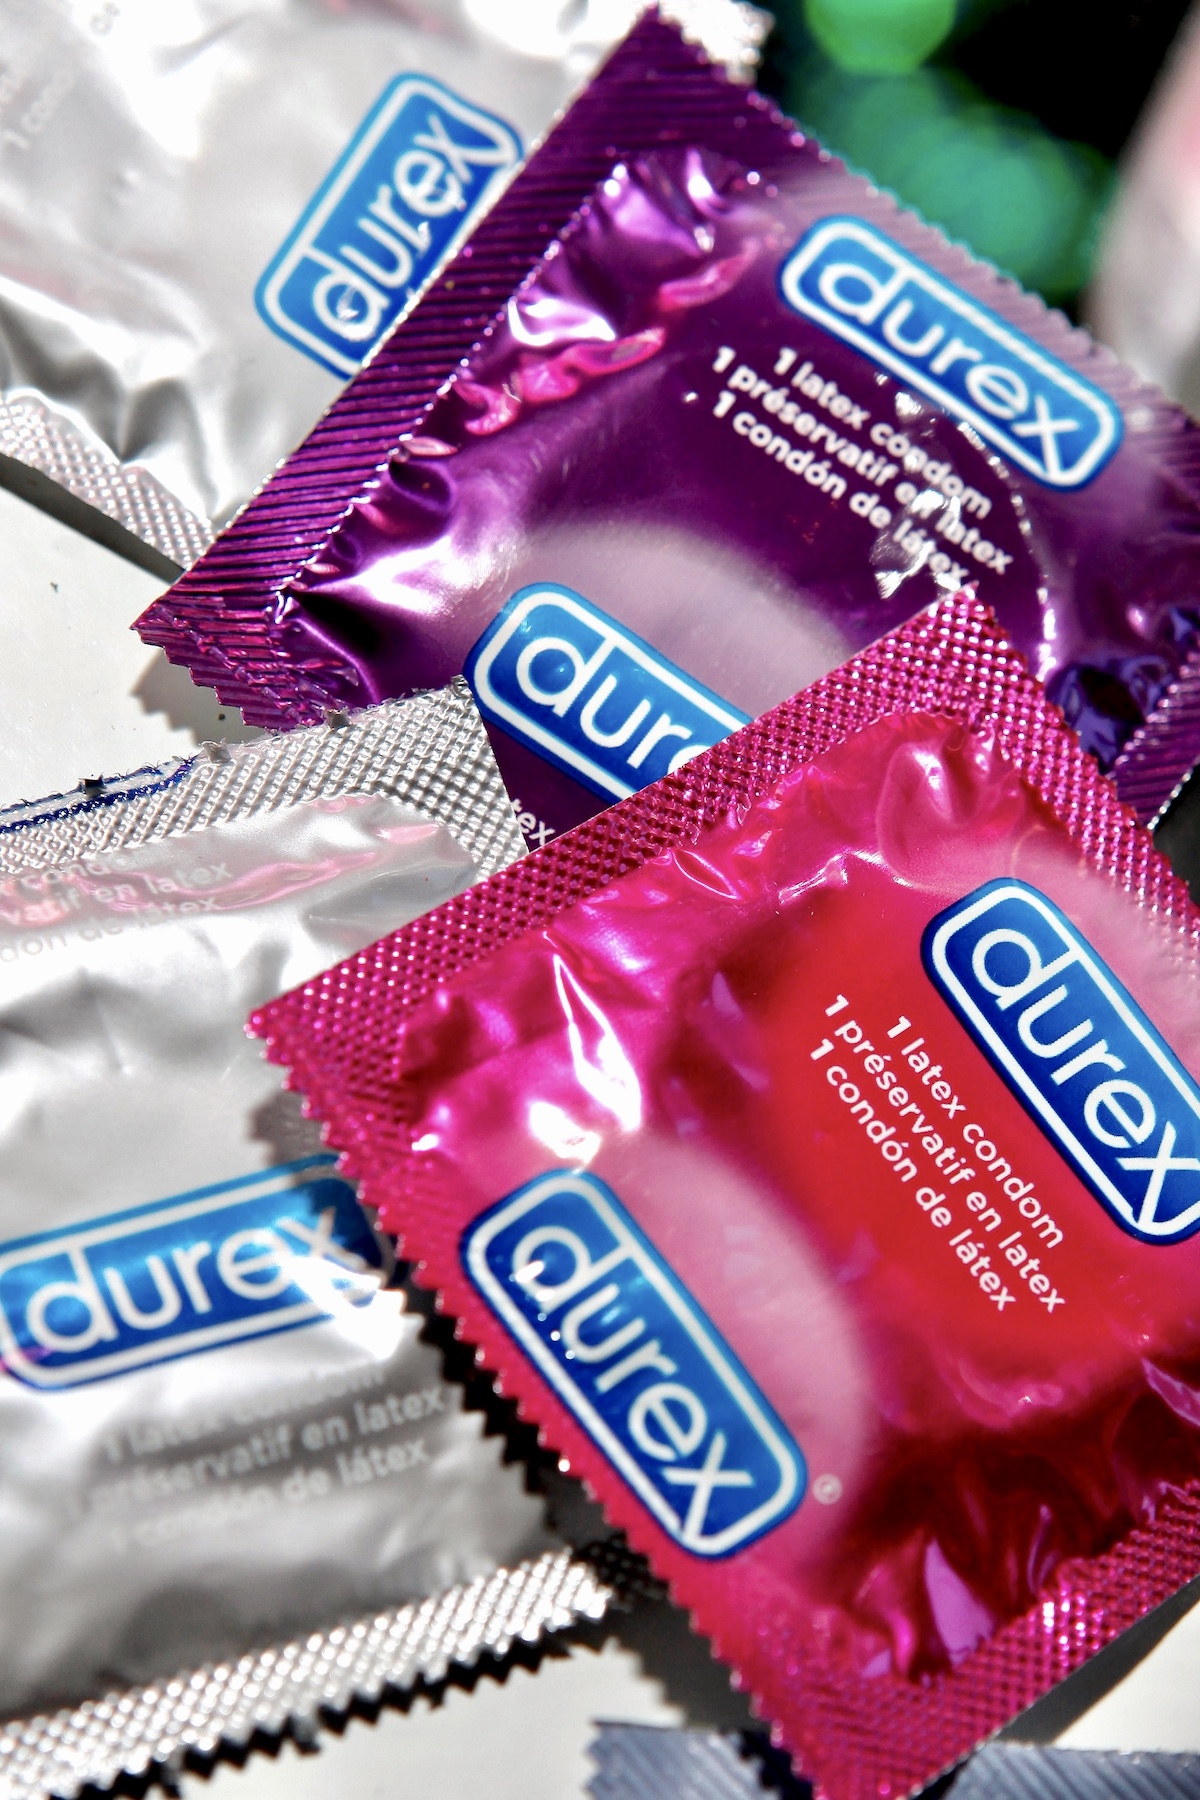 condom durex france free